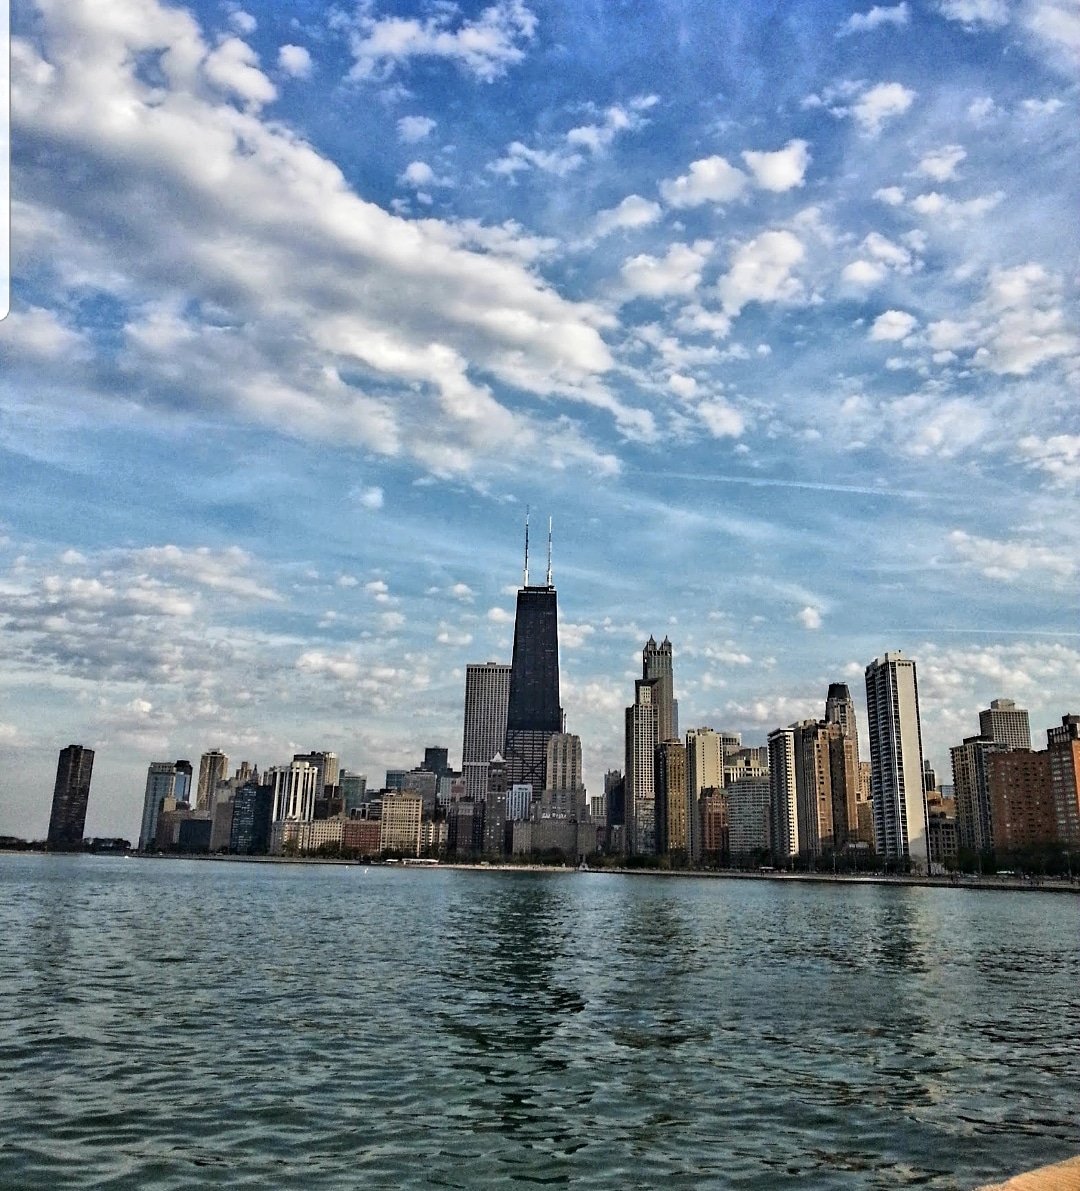 Sweet home Chicago !

#Chicago @chicagotribune @ChooseChicago @chicago @chicagogrammers @Chicago_4_Less @Chicago @SEEChicagoWGN @360chicago #Travel #bbloggers @SkydeckChicago @TrumpChicago